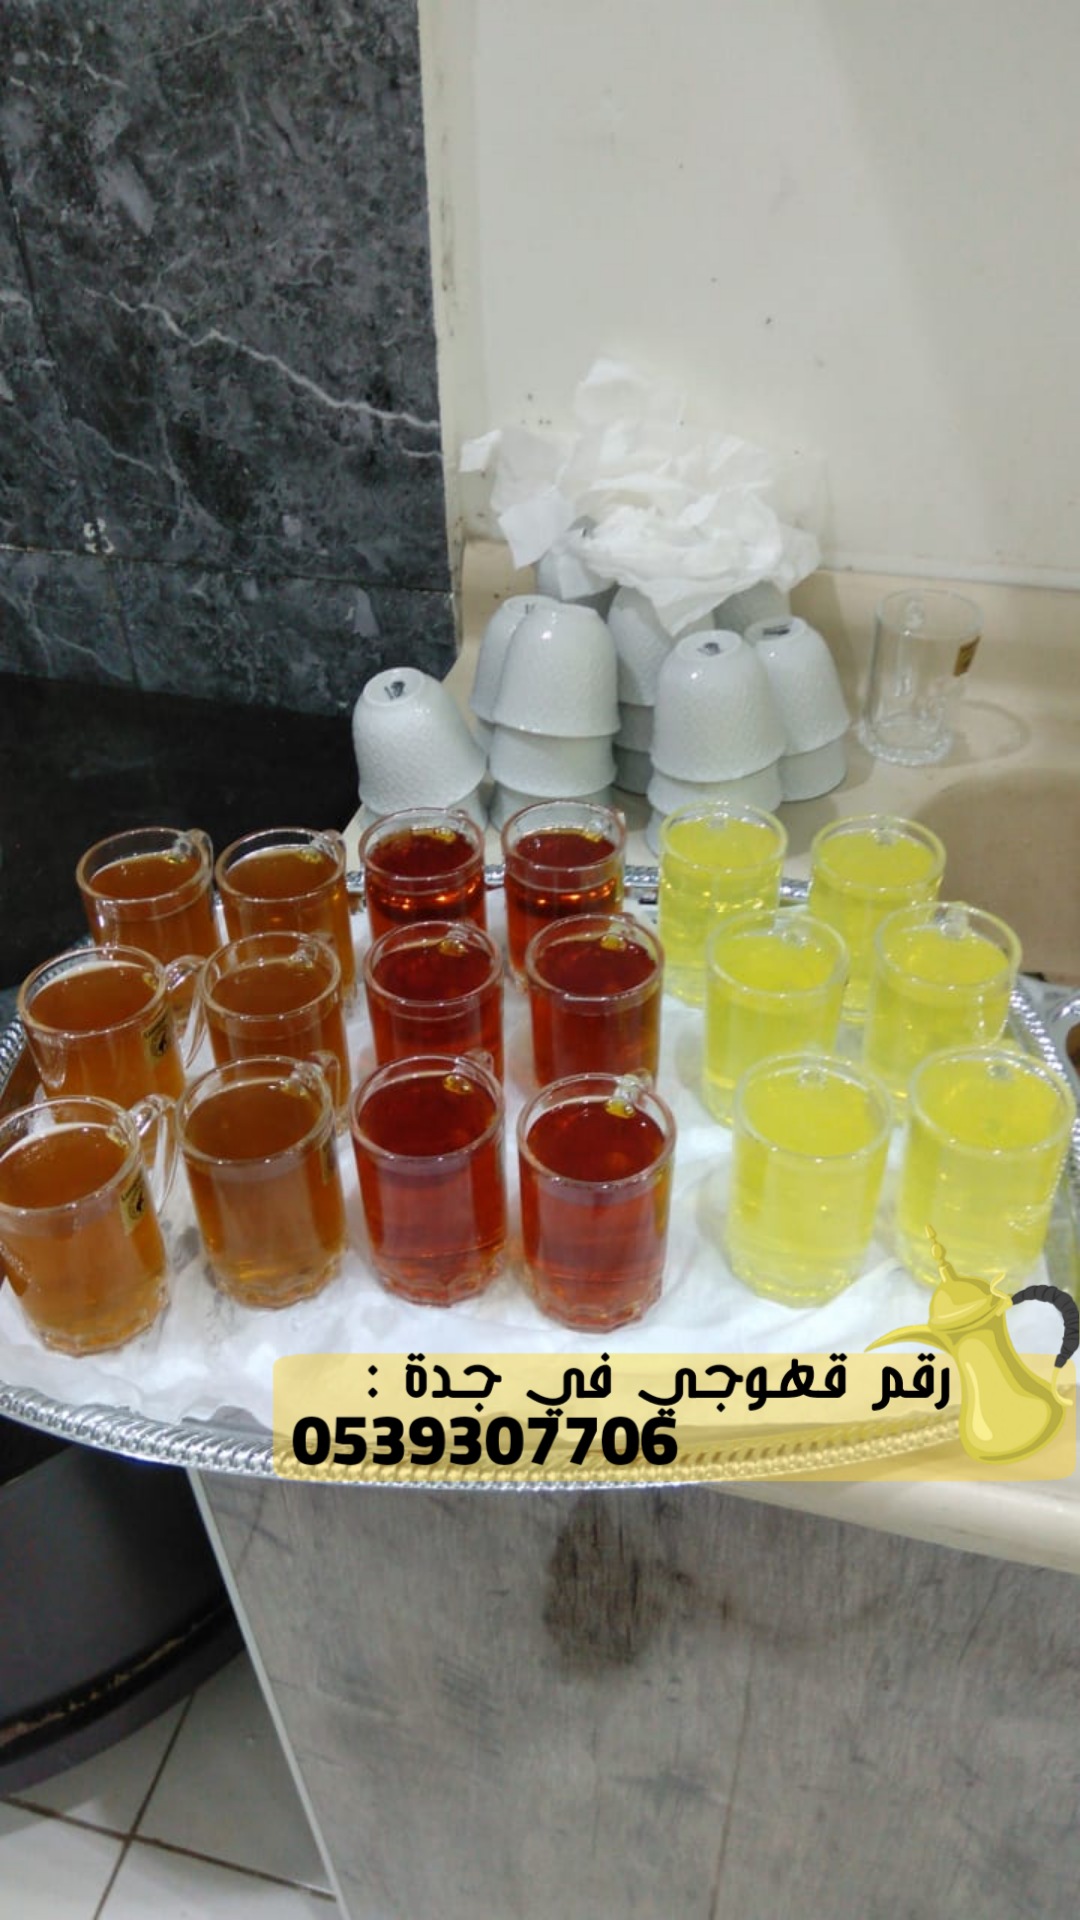 صبابين قهوه مباشرات قهوه في جدة,0539307706